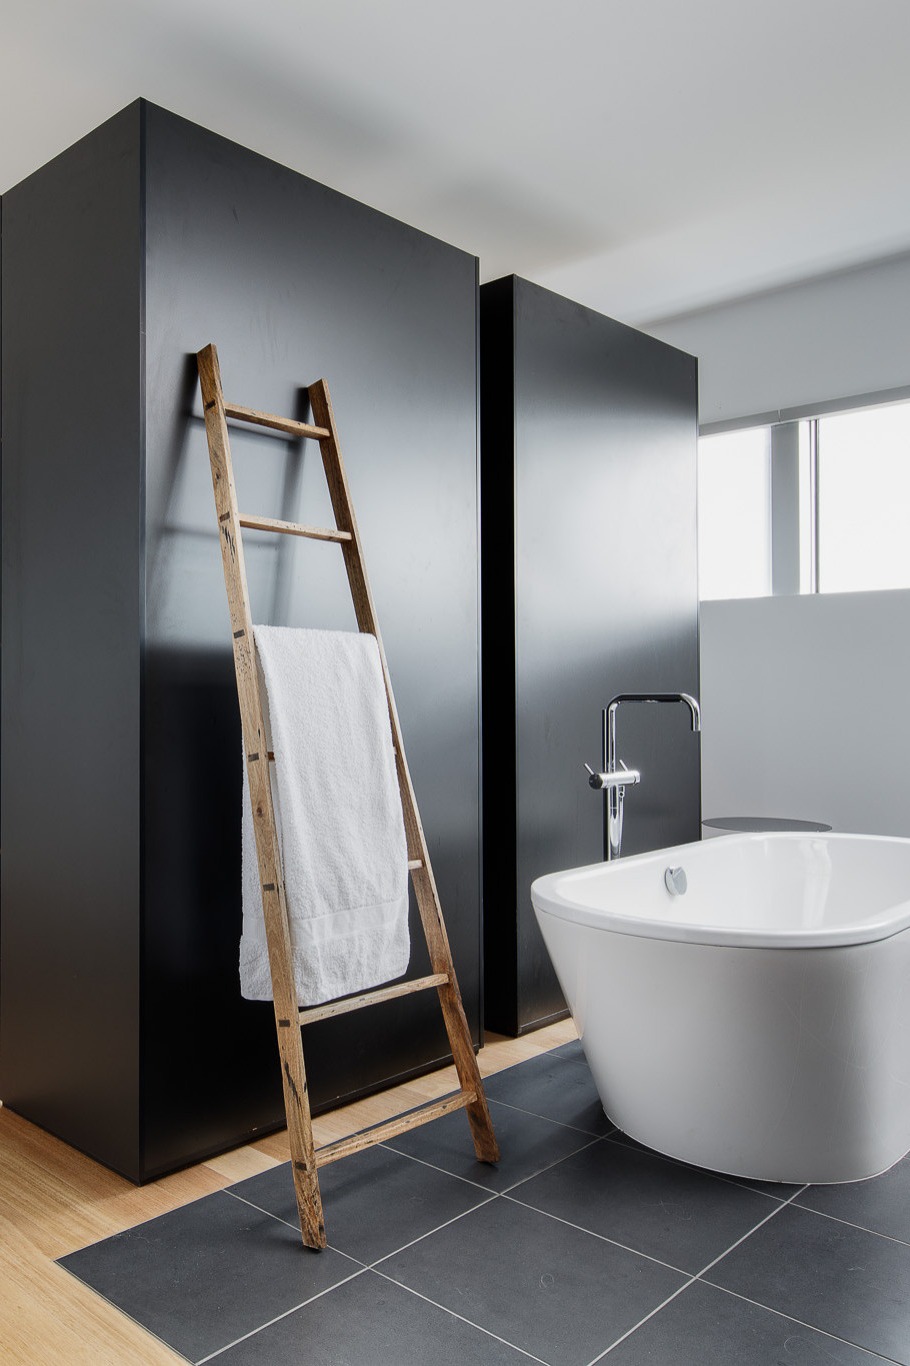 Black Cabinets Medium Tone Wood Floor Freestanding Bathtub Towel Rack White Walls